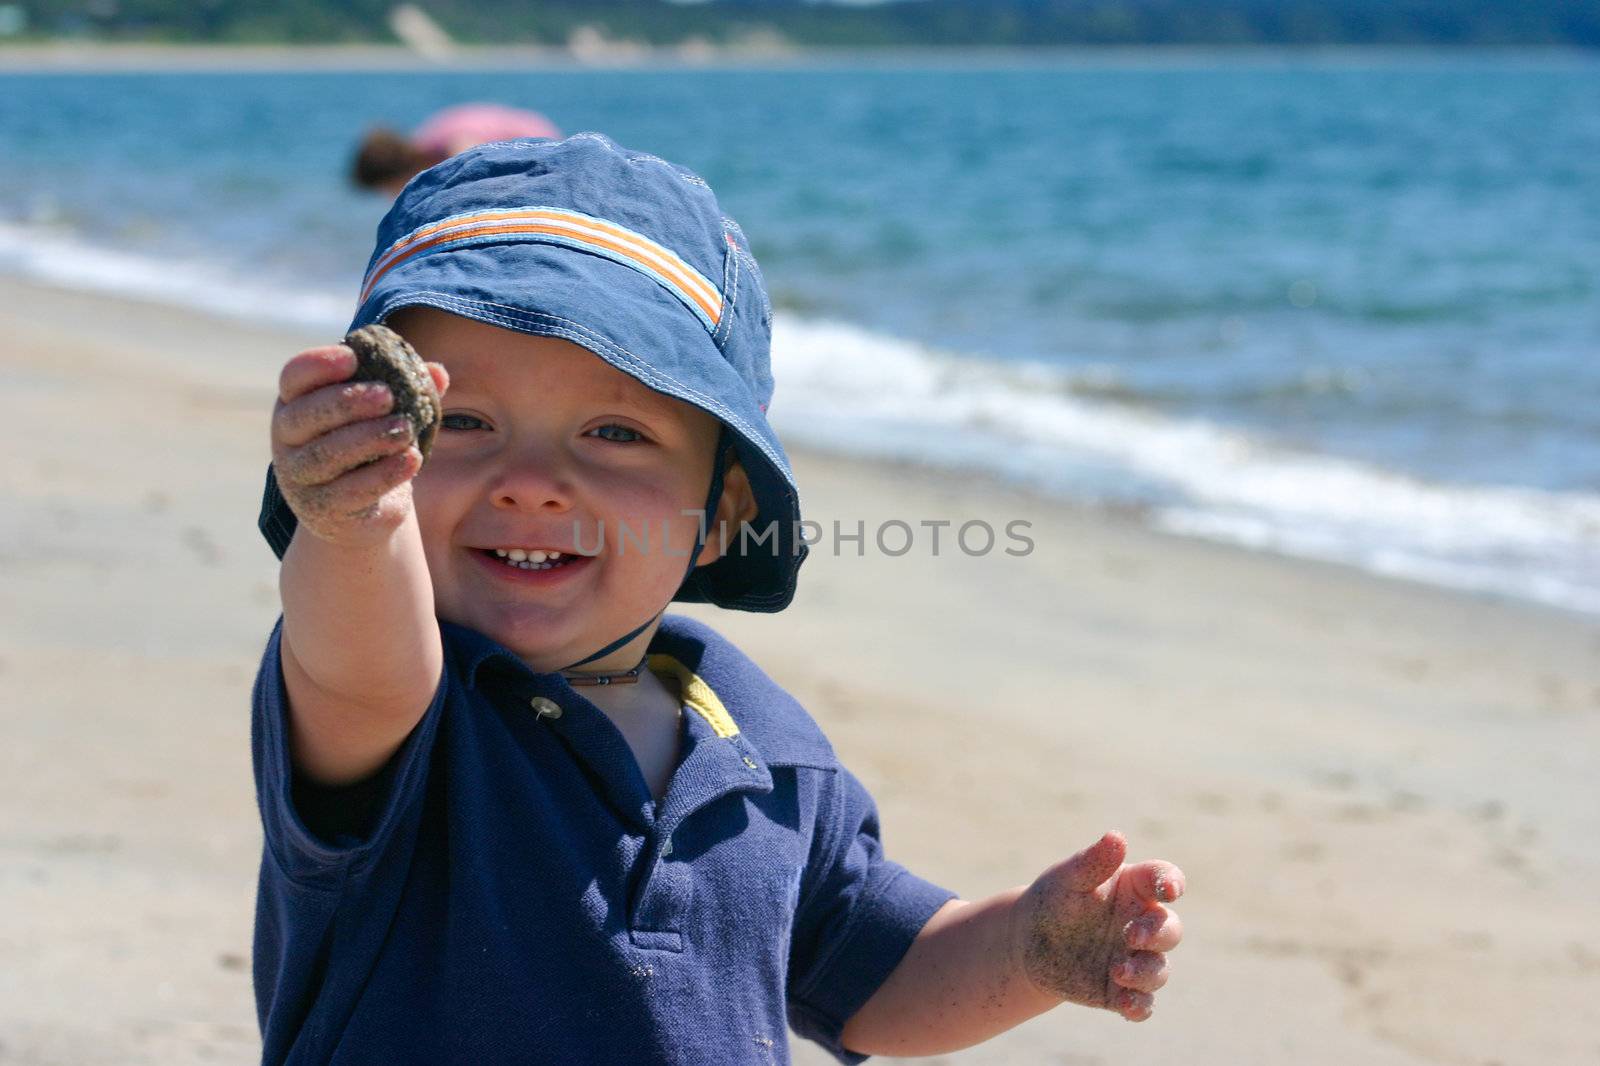 Cute little boy playing on the beach